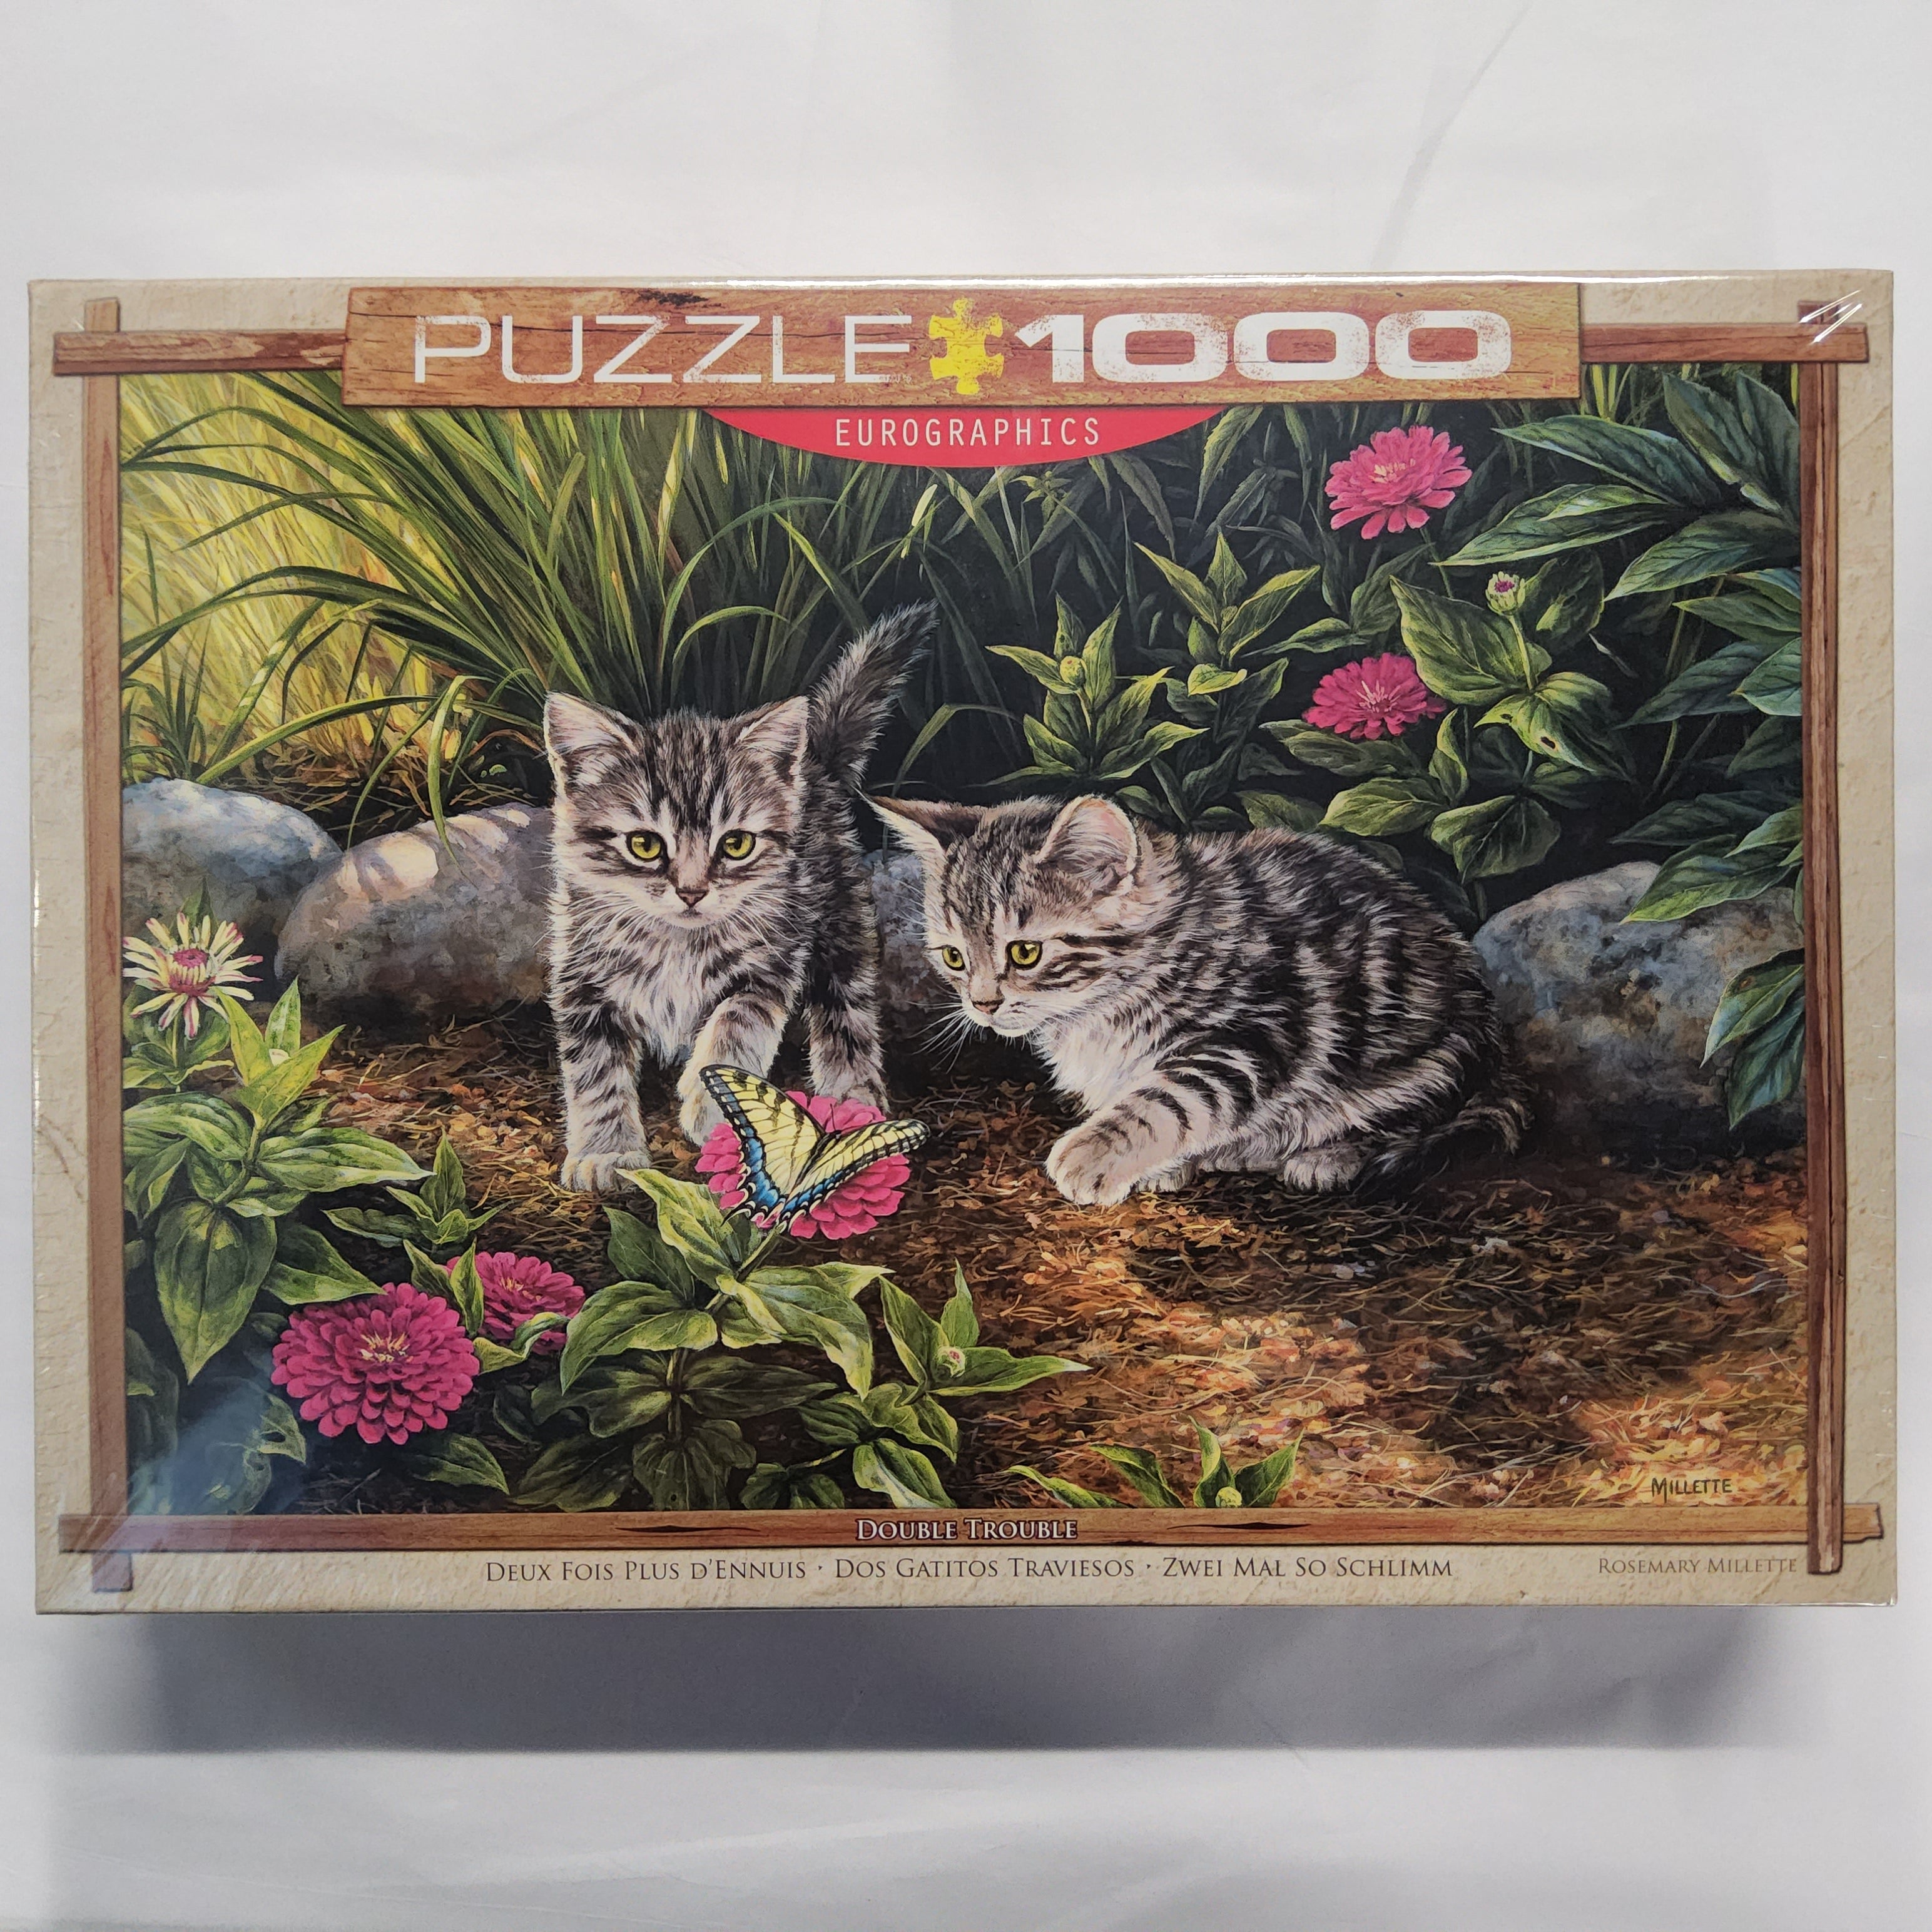 Eurographics Puzzle - Double Trouble - 1000 pieces - 6000-0796